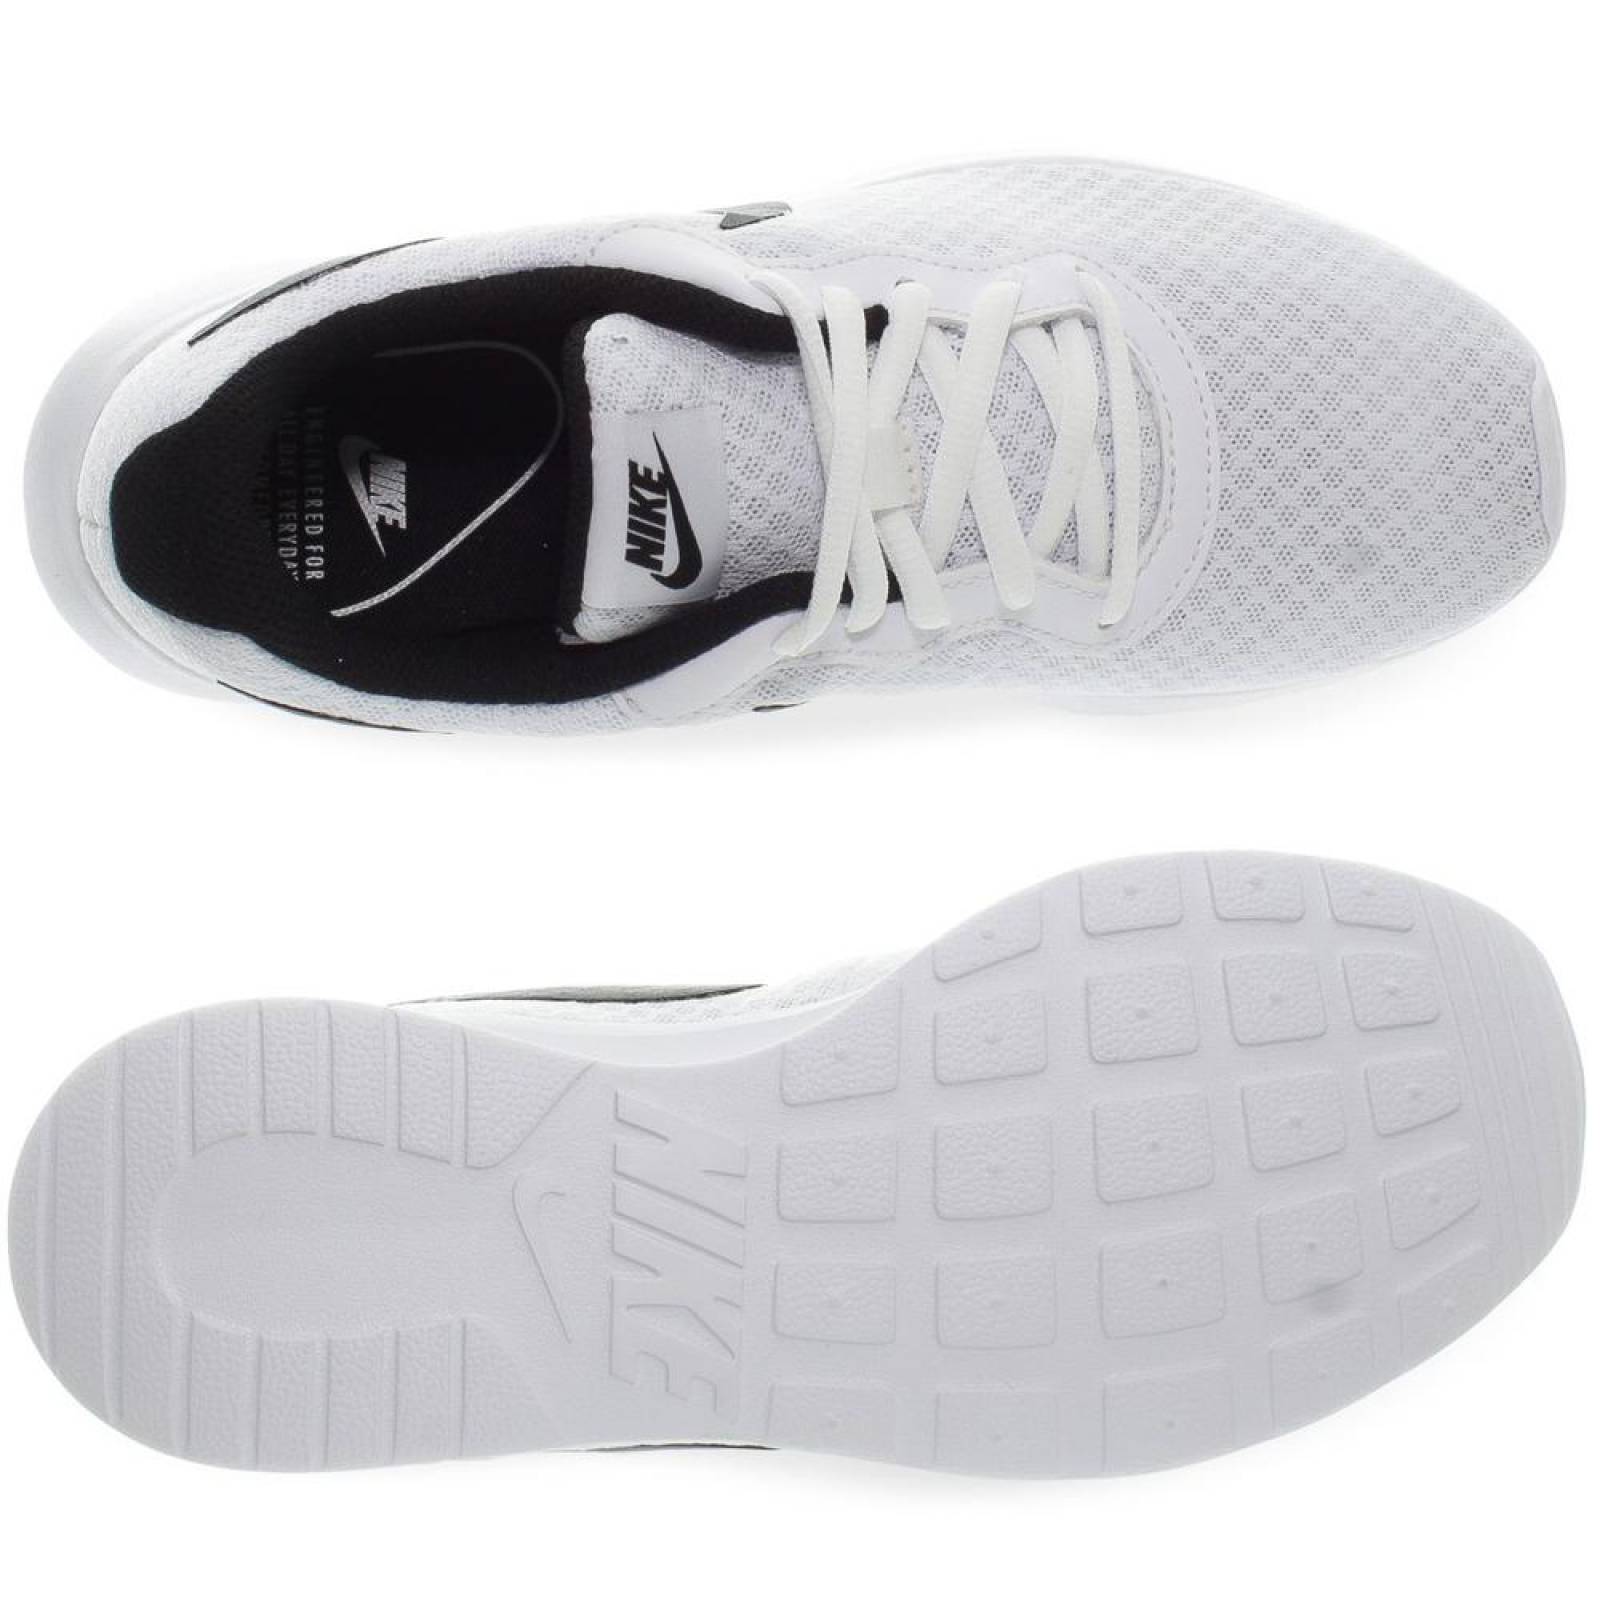 Tenis Nike Tanjun - 812655100 - Blanco - Mujer 